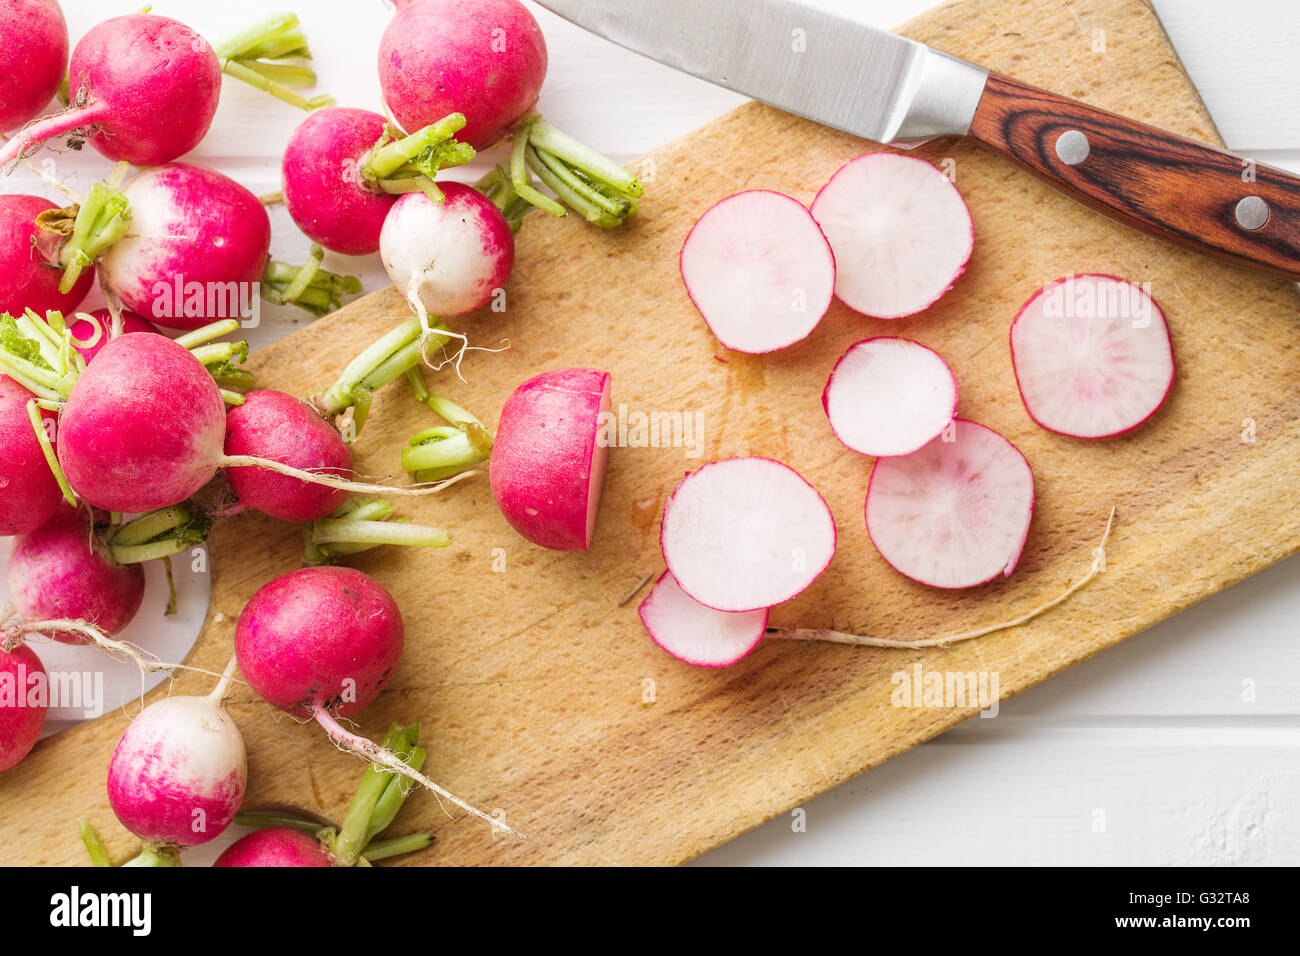 https://c8.alamy.com/comp/G32TA8/fresh-radishes-on-old-cutting-board-with-knife-sliced-red-radishes-G32TA8.jpg